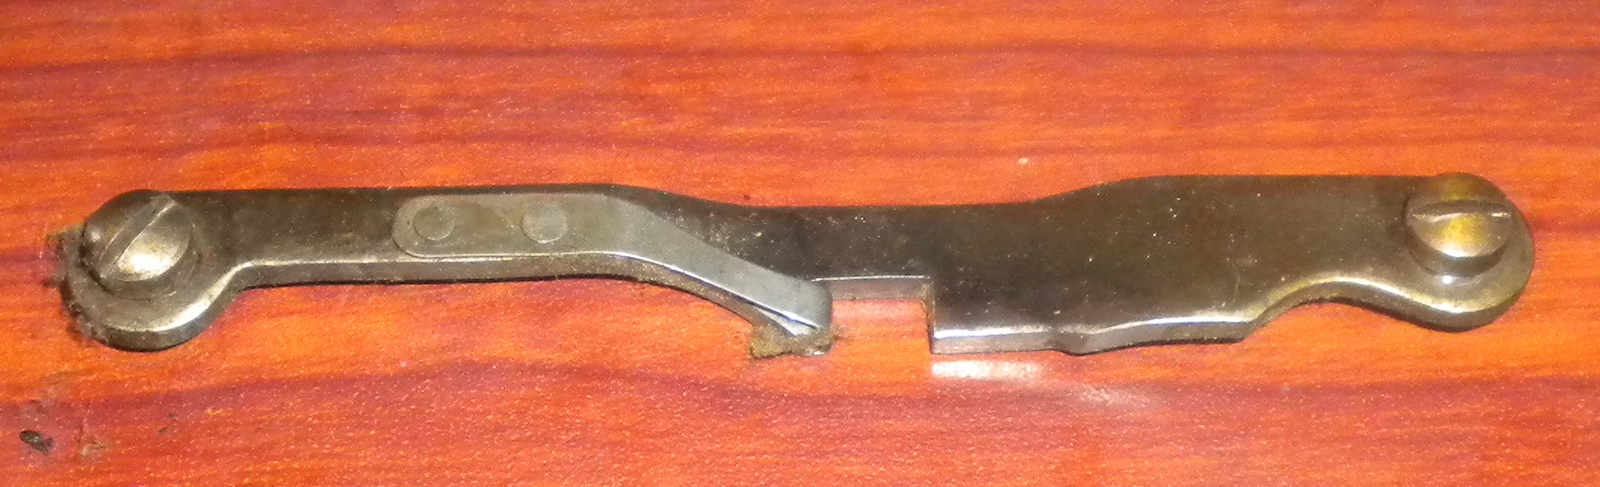 Primary image for Eldredge 2 Spool Hook Shuttle Finger #179, Stop Bar #181 w/Two Screws #182